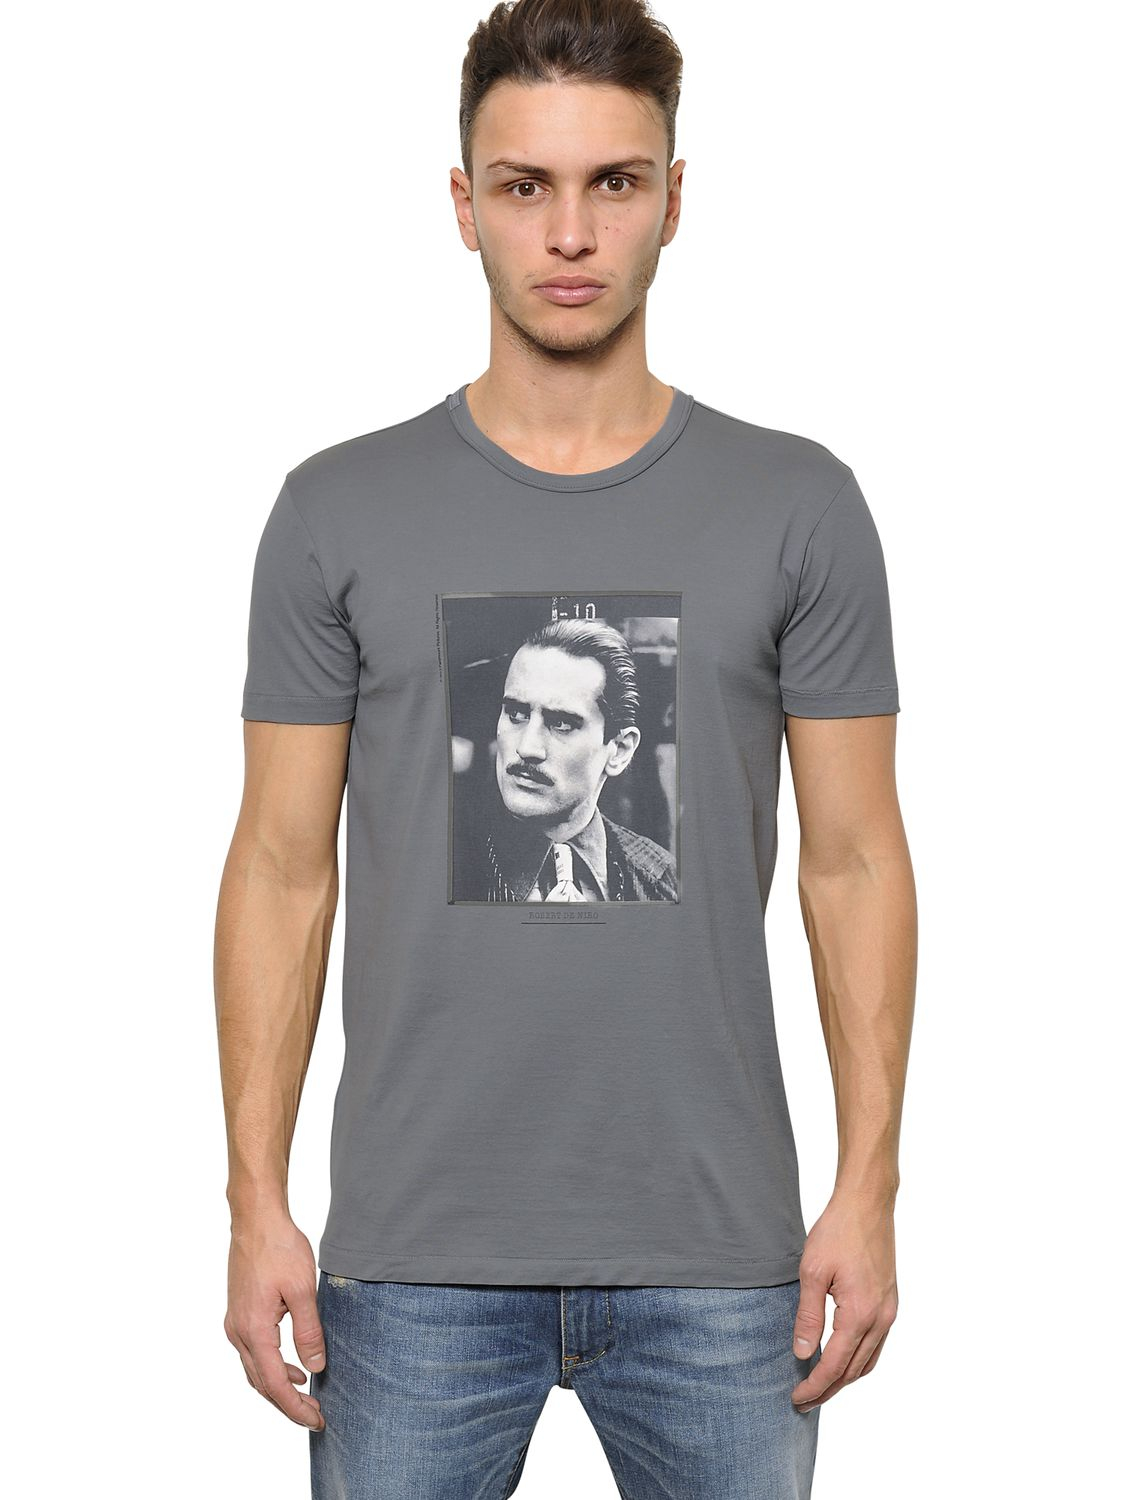 Dolce & gabbana Robert De Niro Cotton Jersey Tshirt in Gray for Men | Lyst